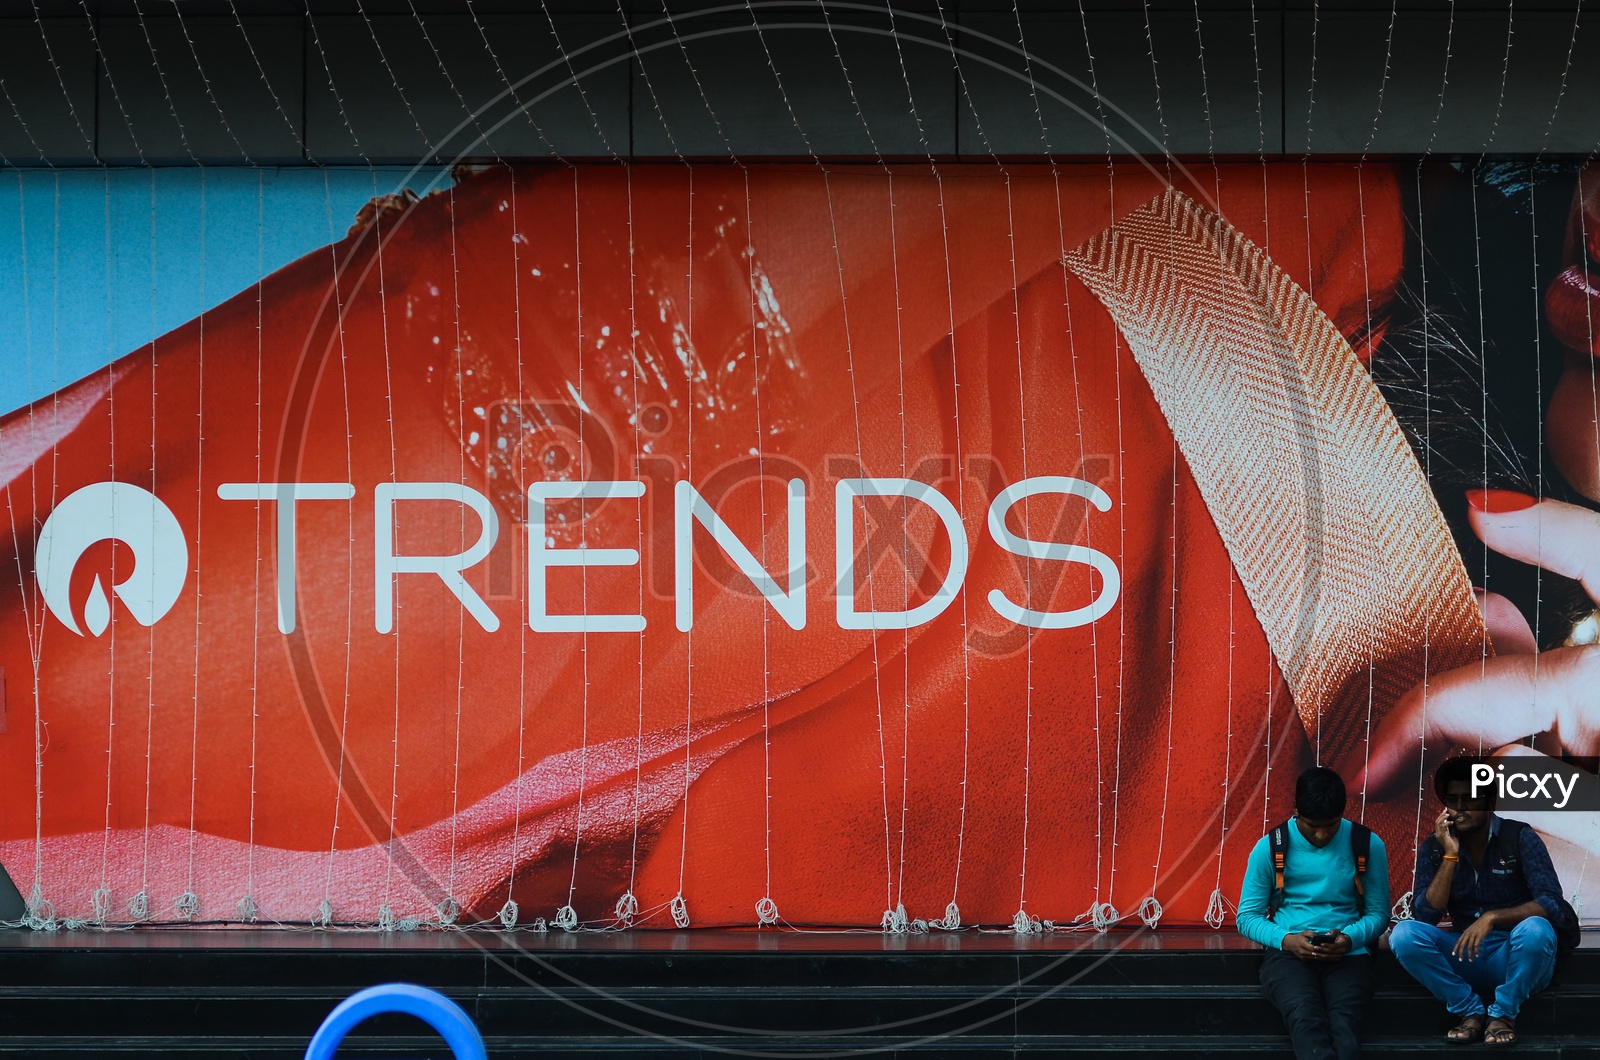 Reliance Trends, Logopedia